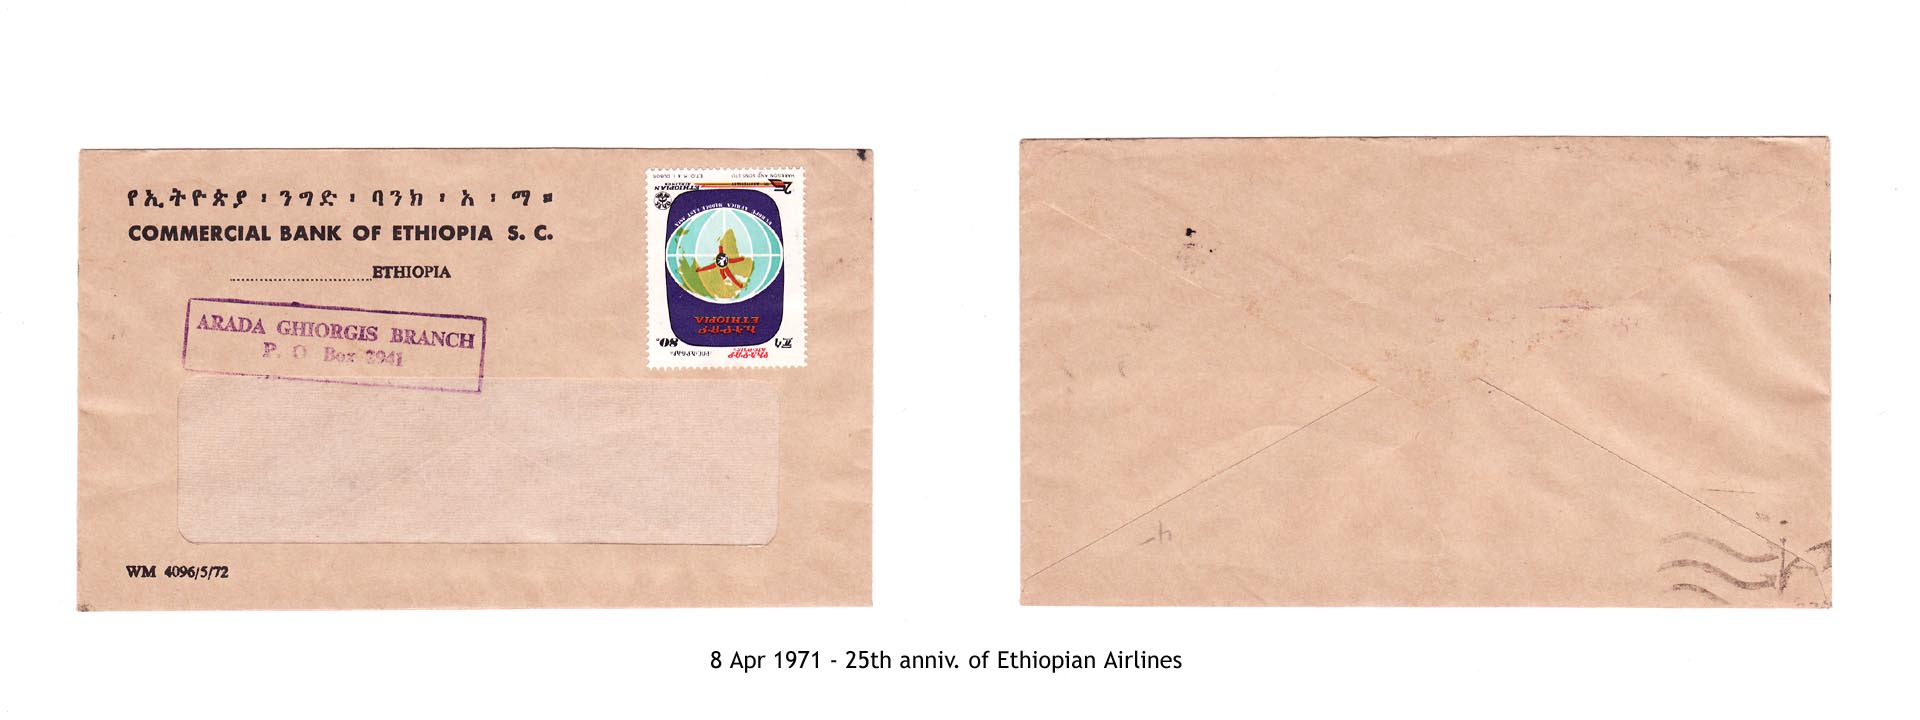 19710408 - 25th anniv. of Ethiopian Airlines